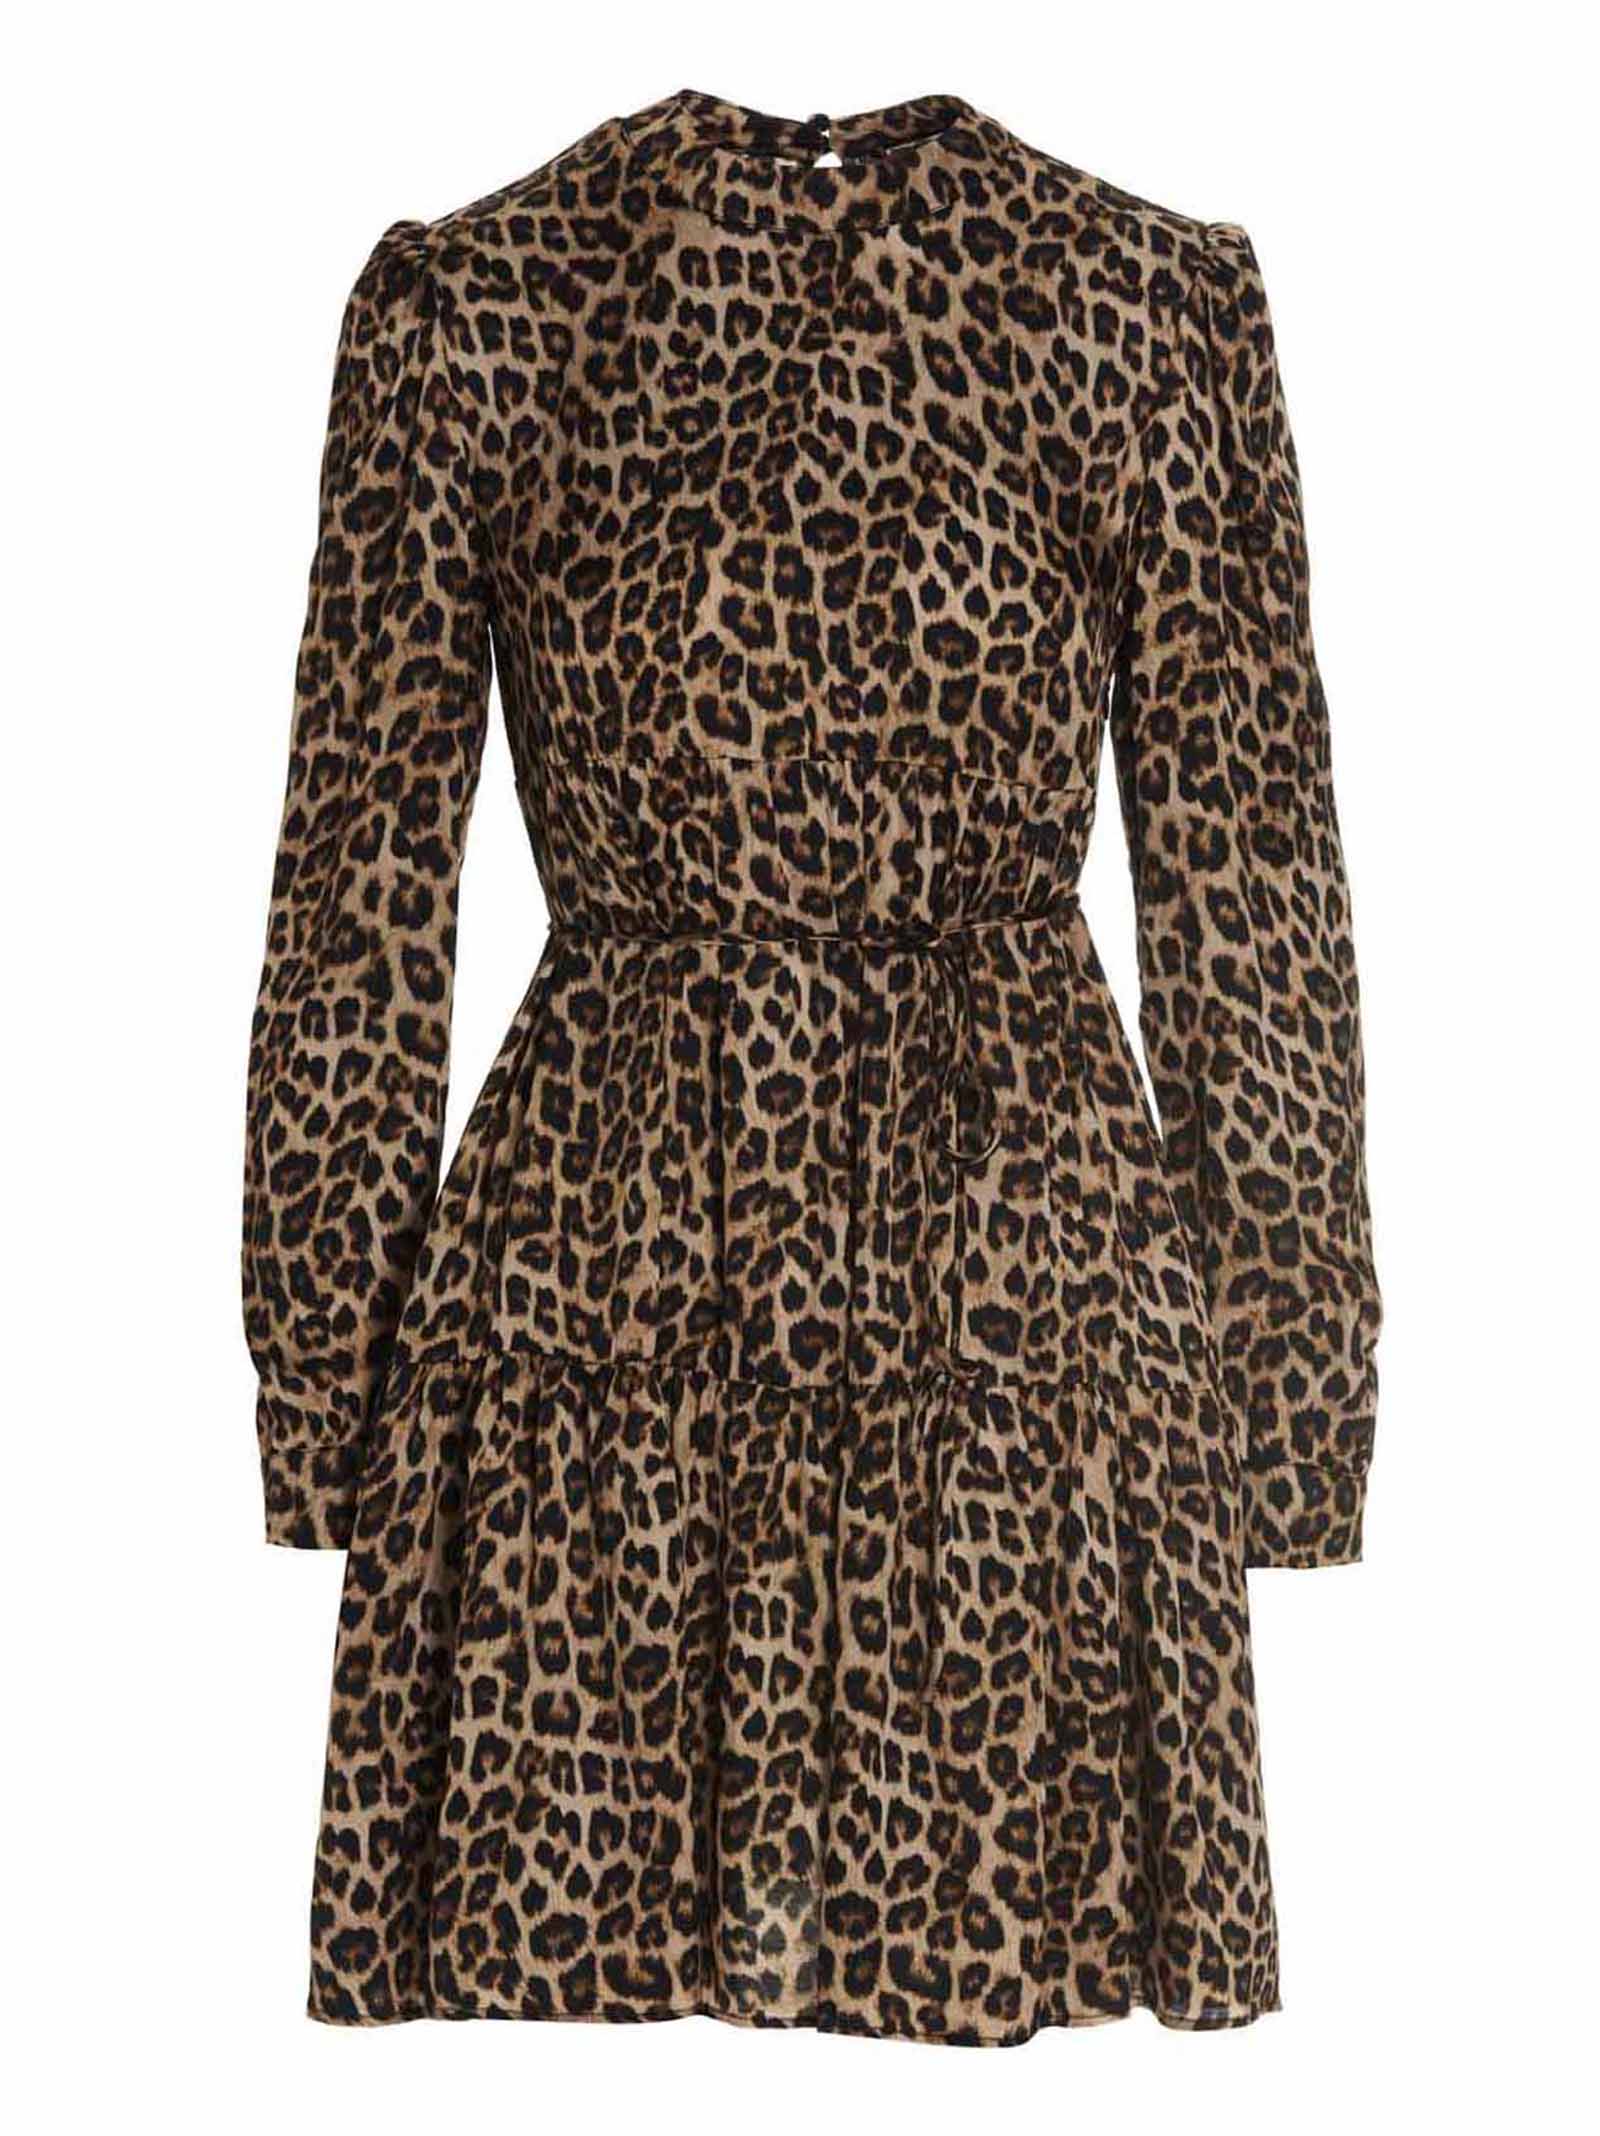 TwinSet Leopard Dress